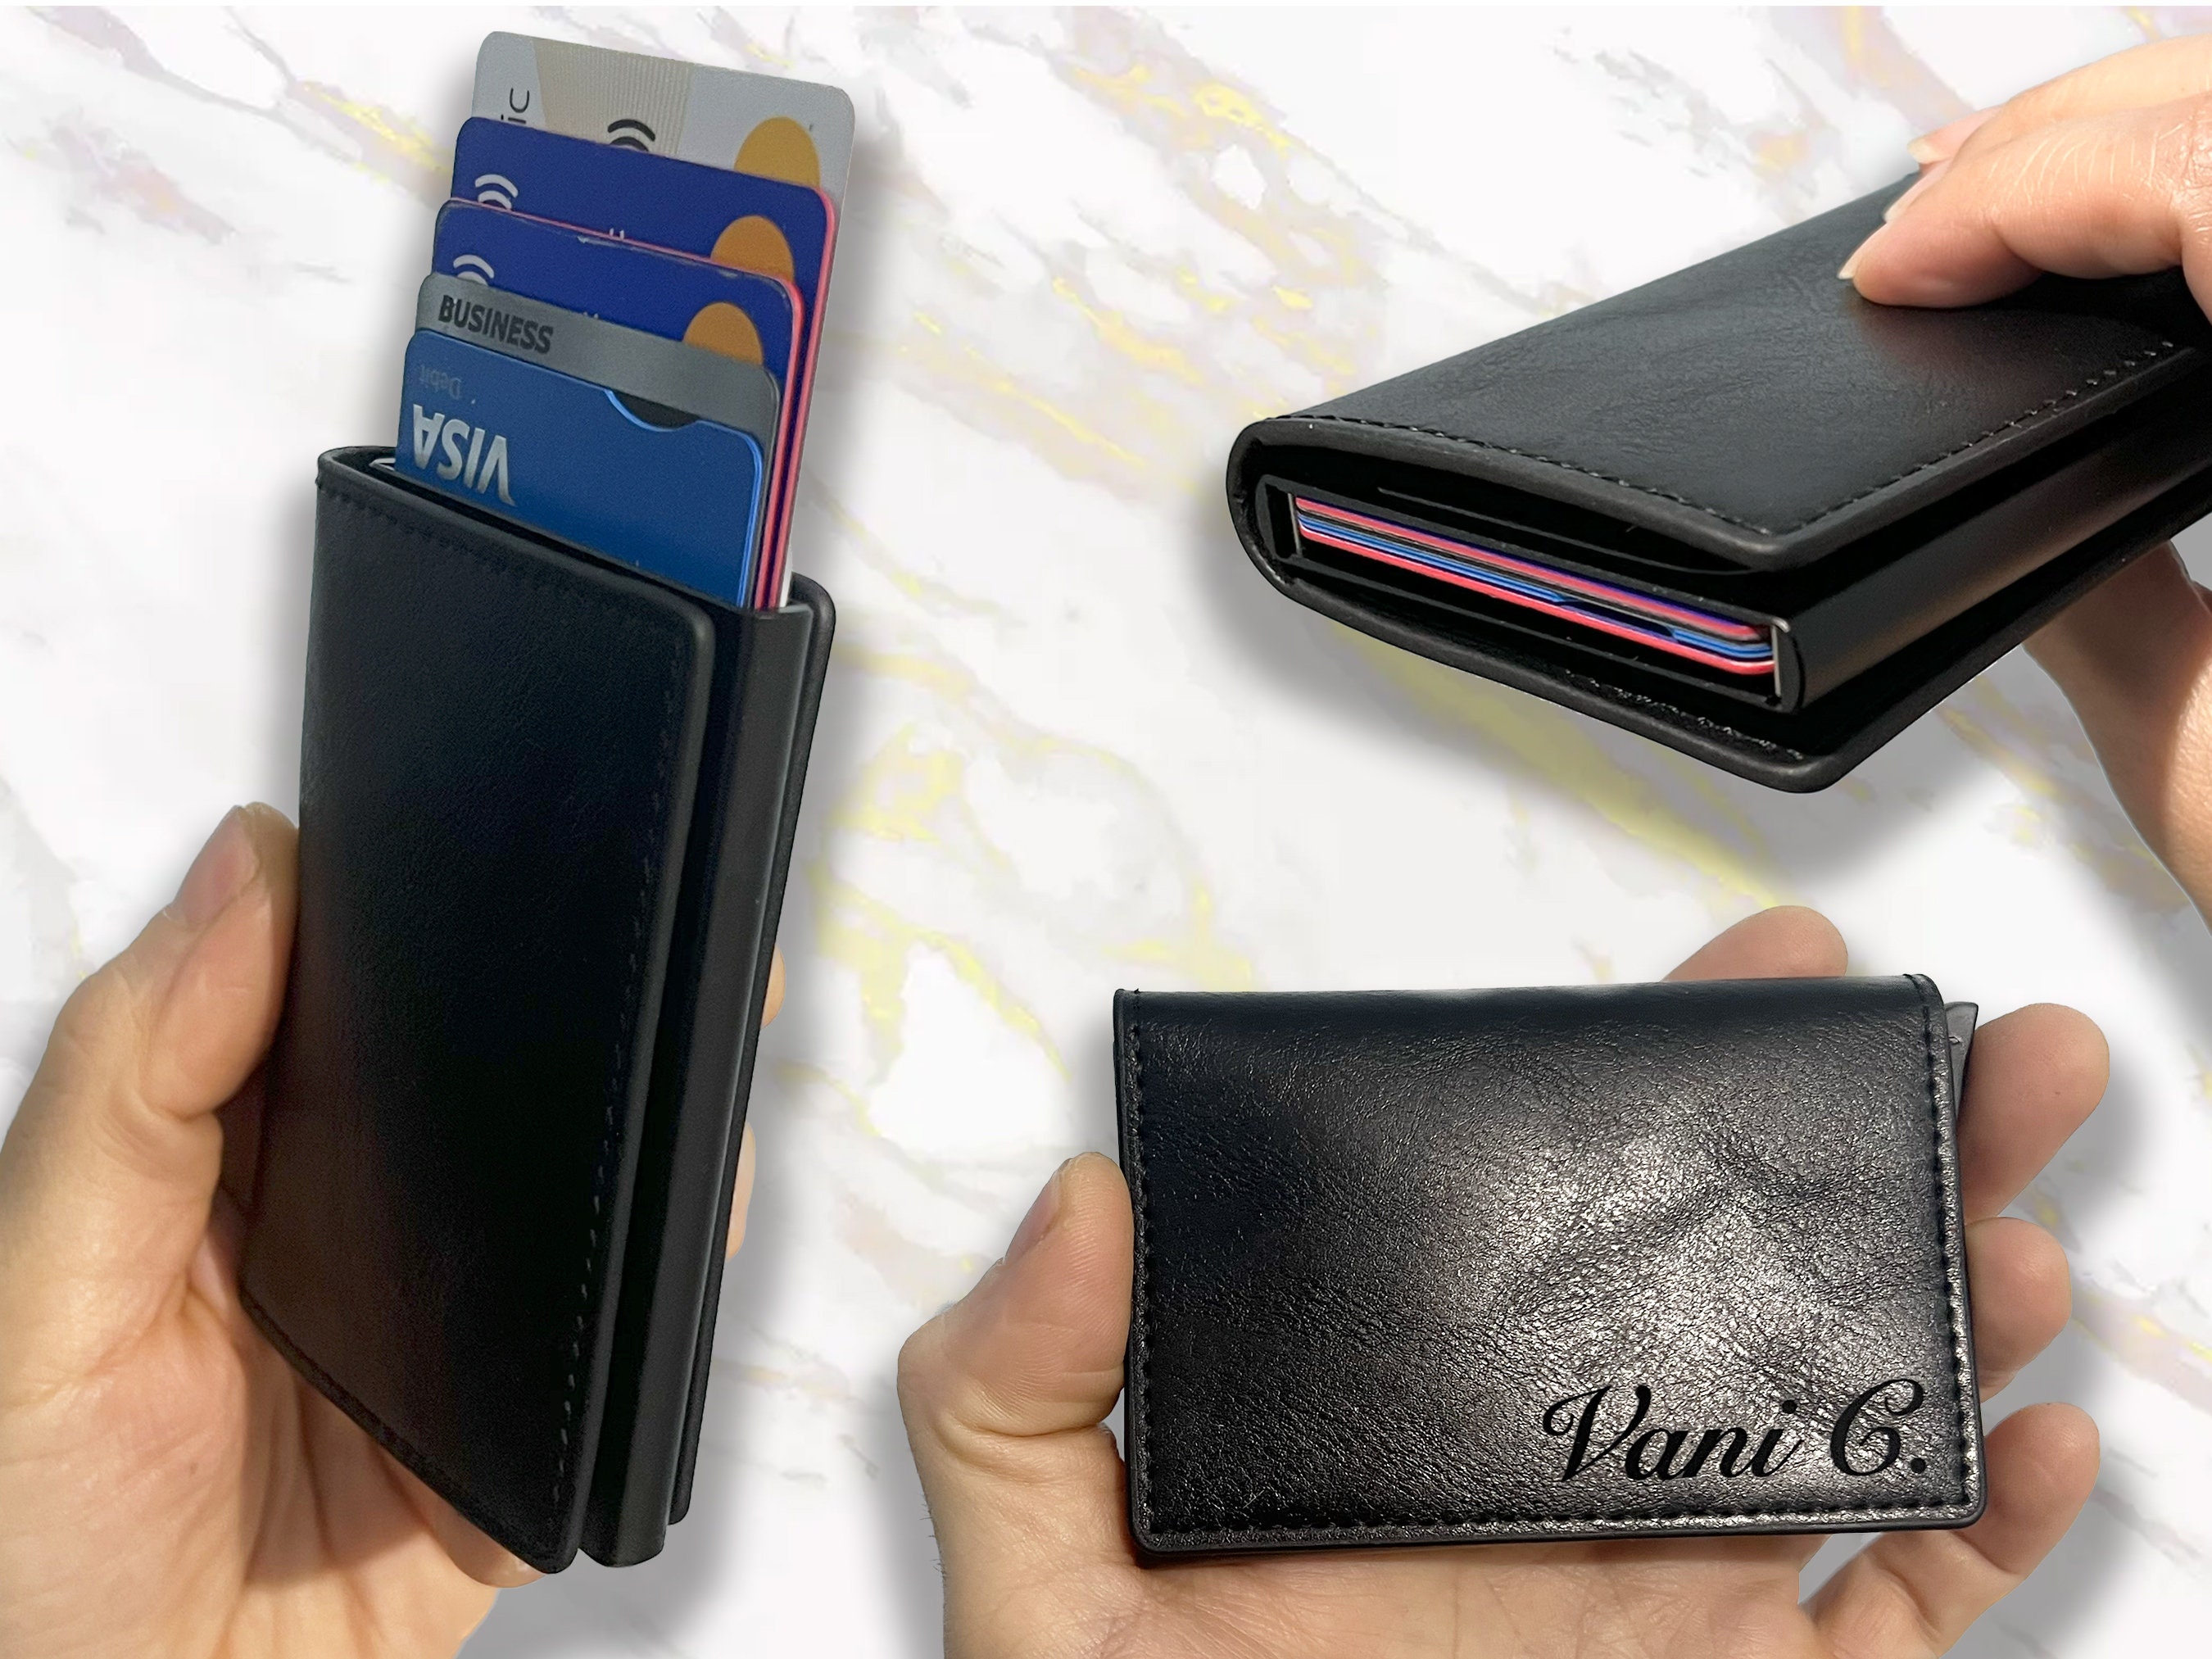 Kelly & Katie Slim Organizer Leather Card Case Wallet | Women's | Red | Size One Size | Wallets